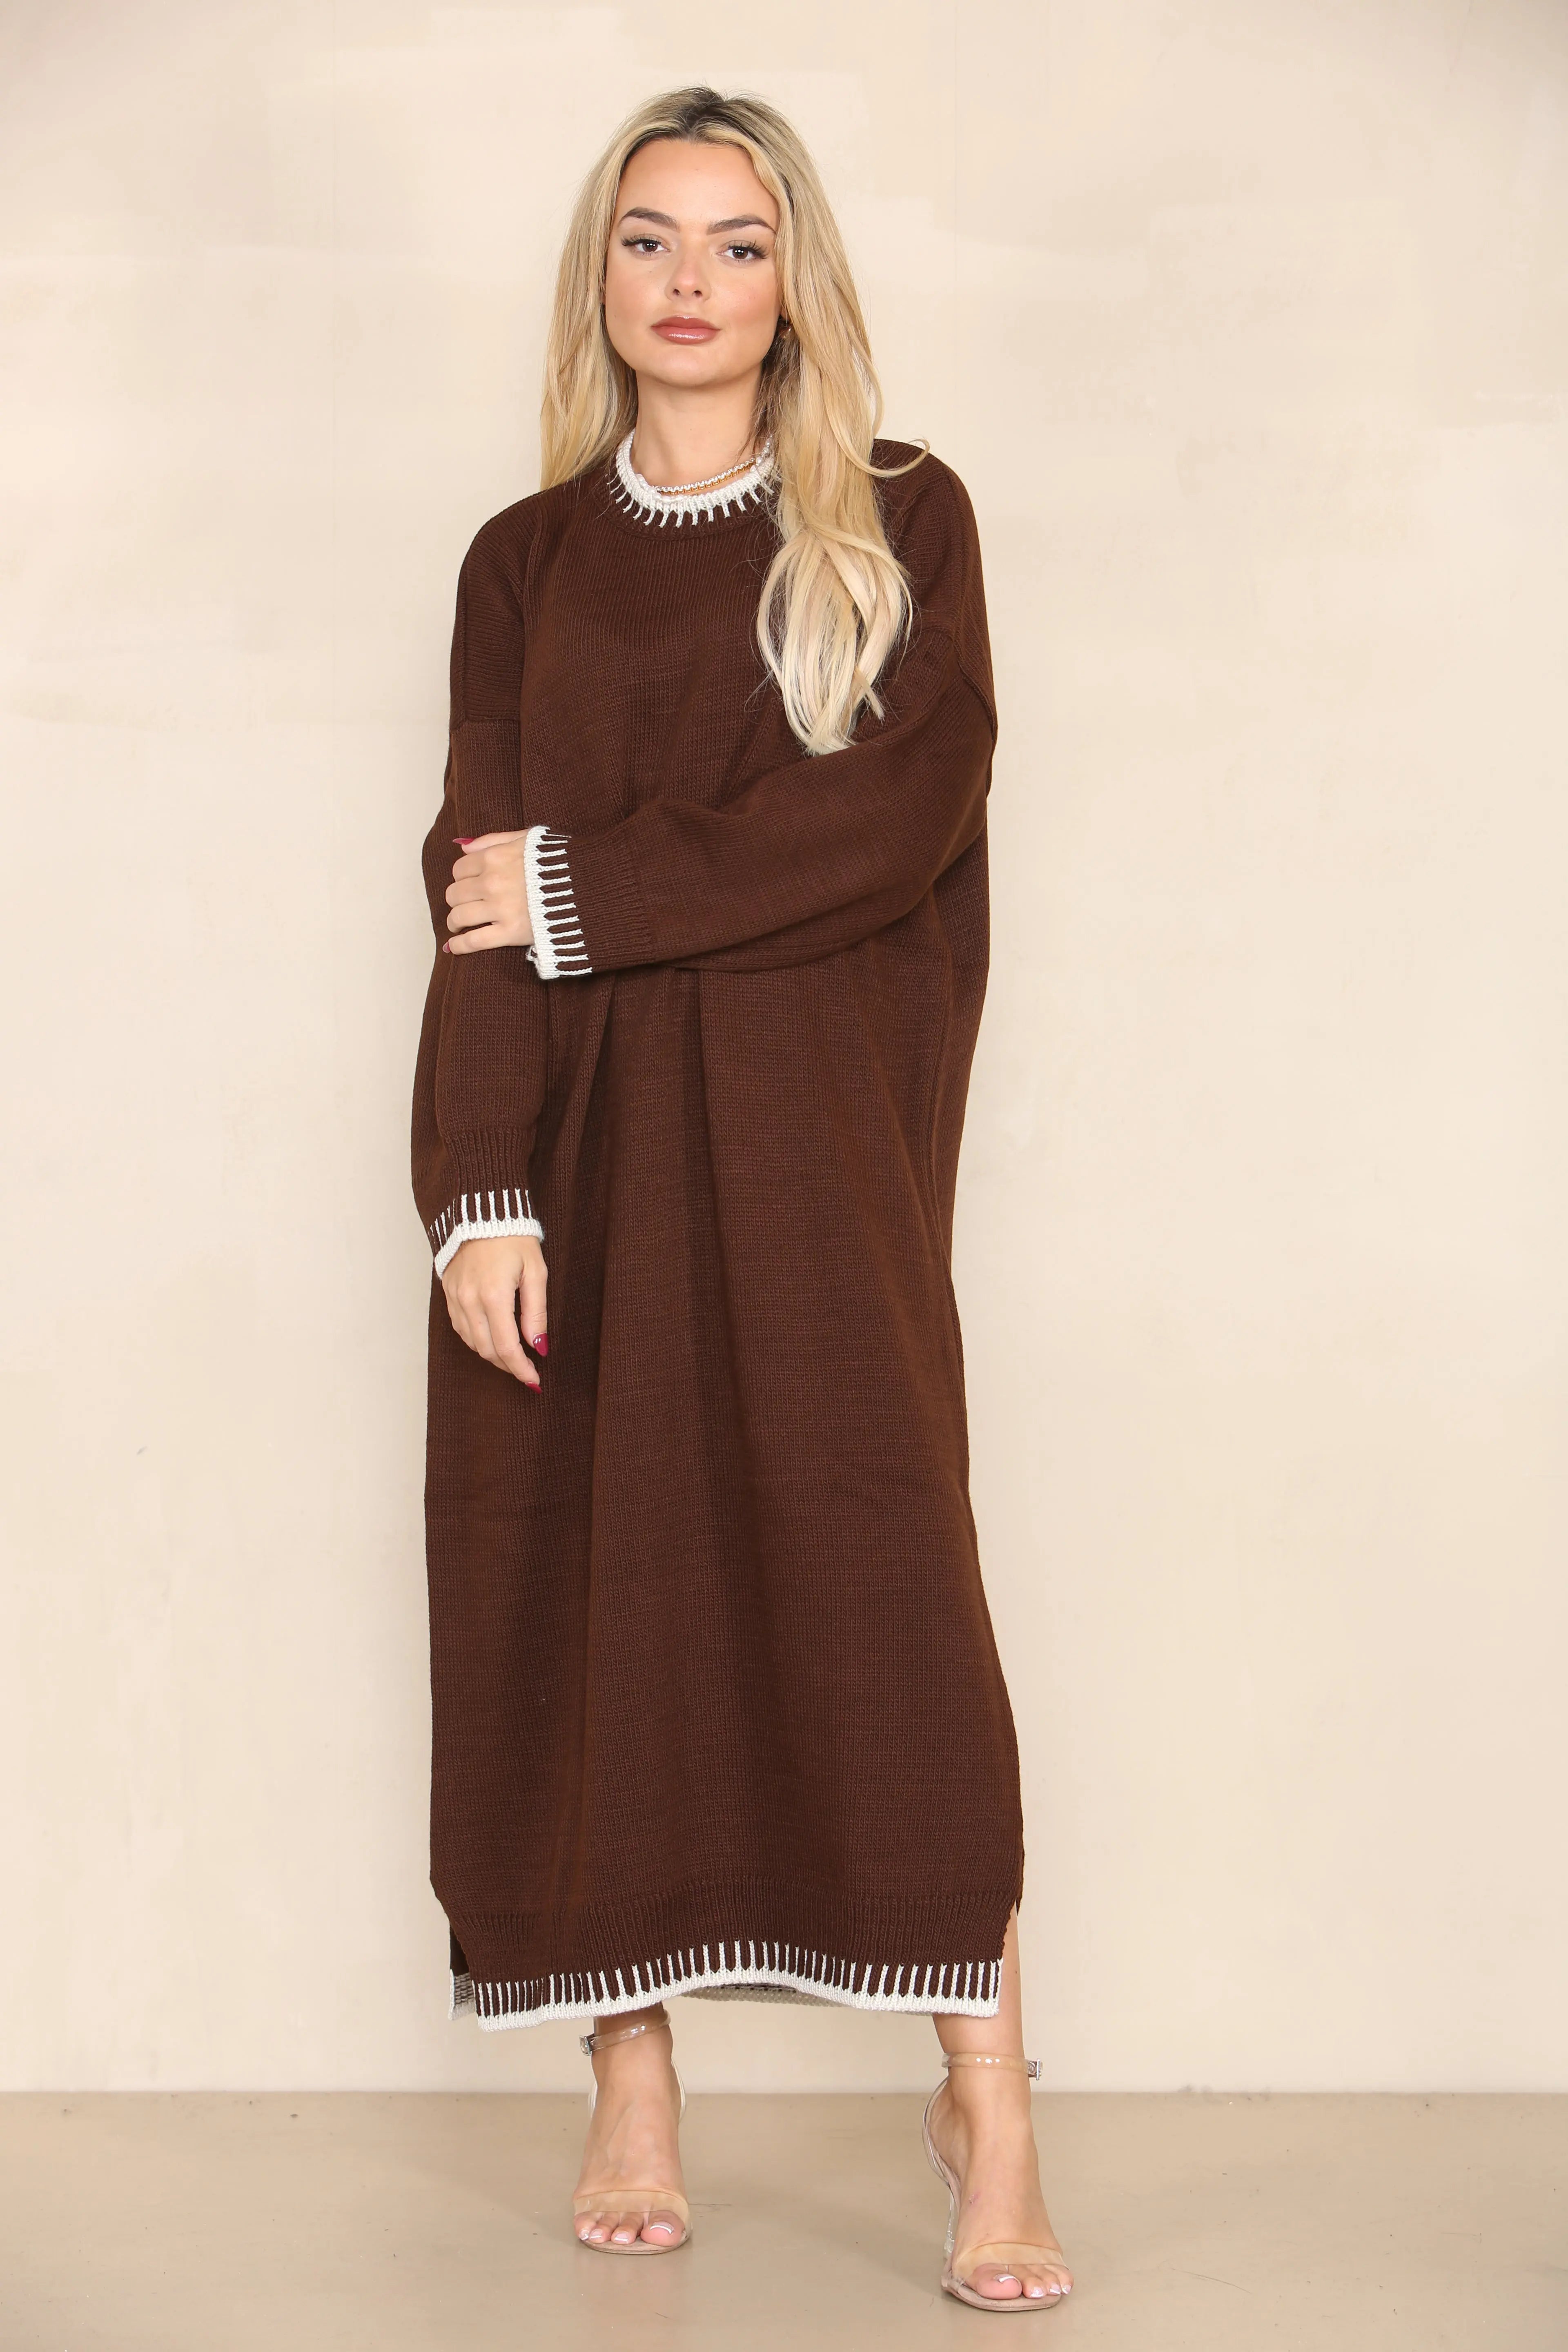 KATCH ME Coffee Commuter Versatile Color Matching Edge Long Sleeve Loose Dress Dress 28.99